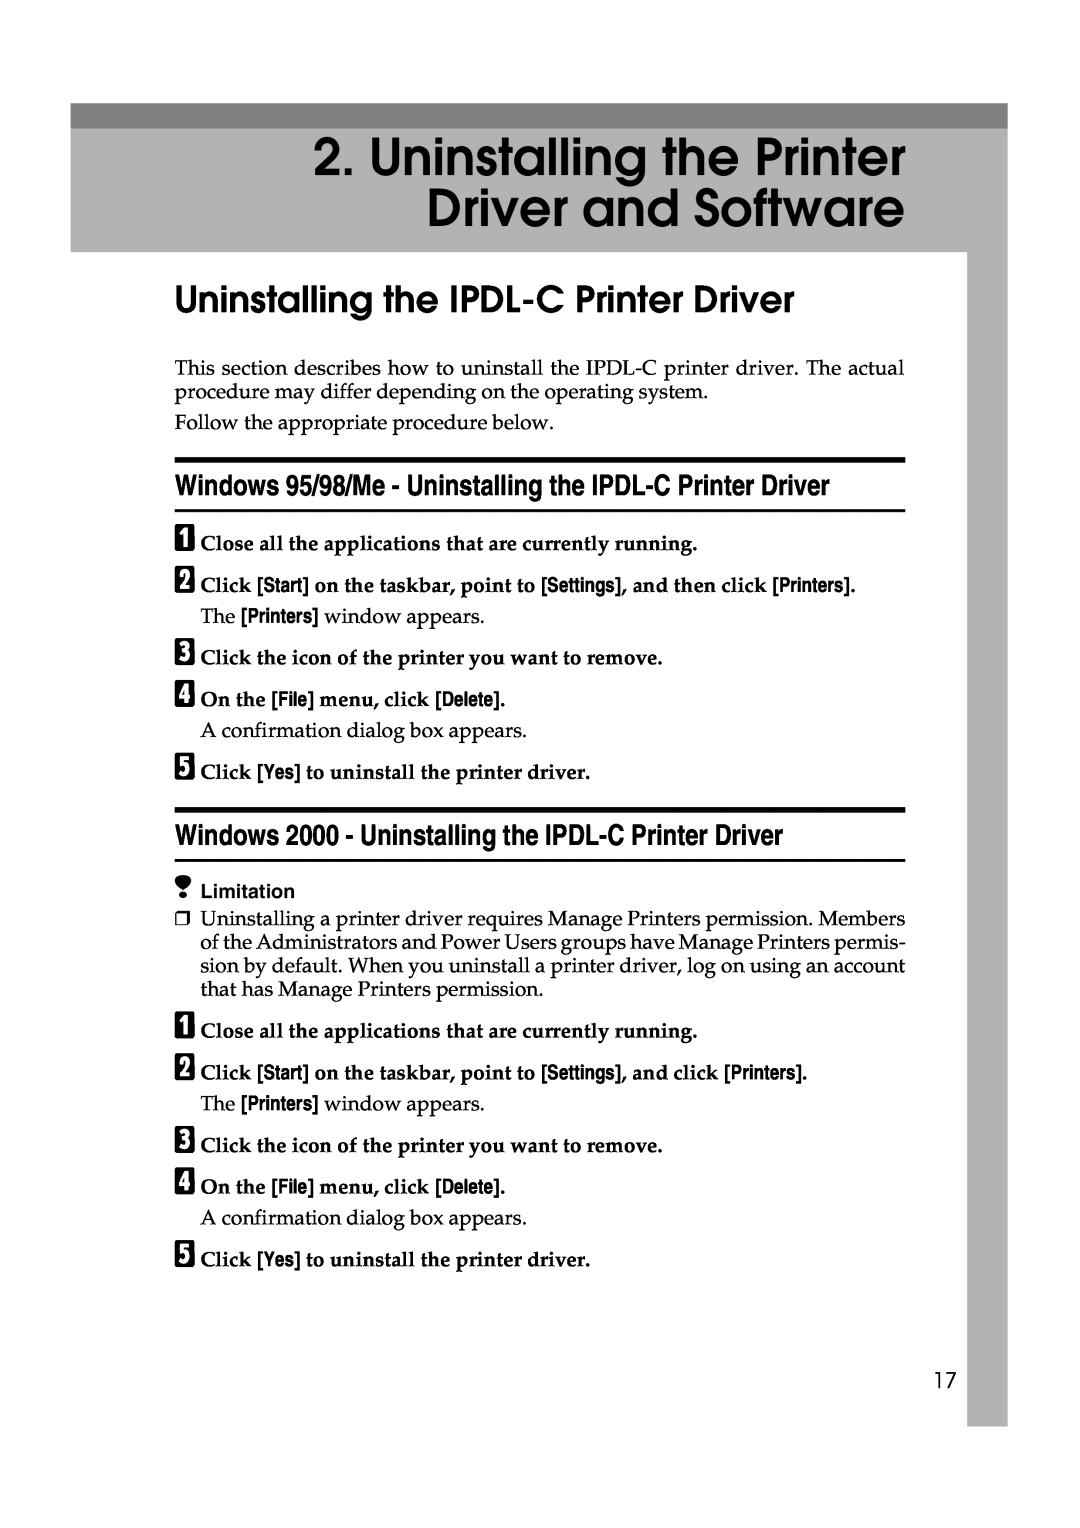 Lanier AP206 Uninstalling the Printer Driver and Software, Uninstalling the IPDL-C Printer Driver, A B C D, Limitation 